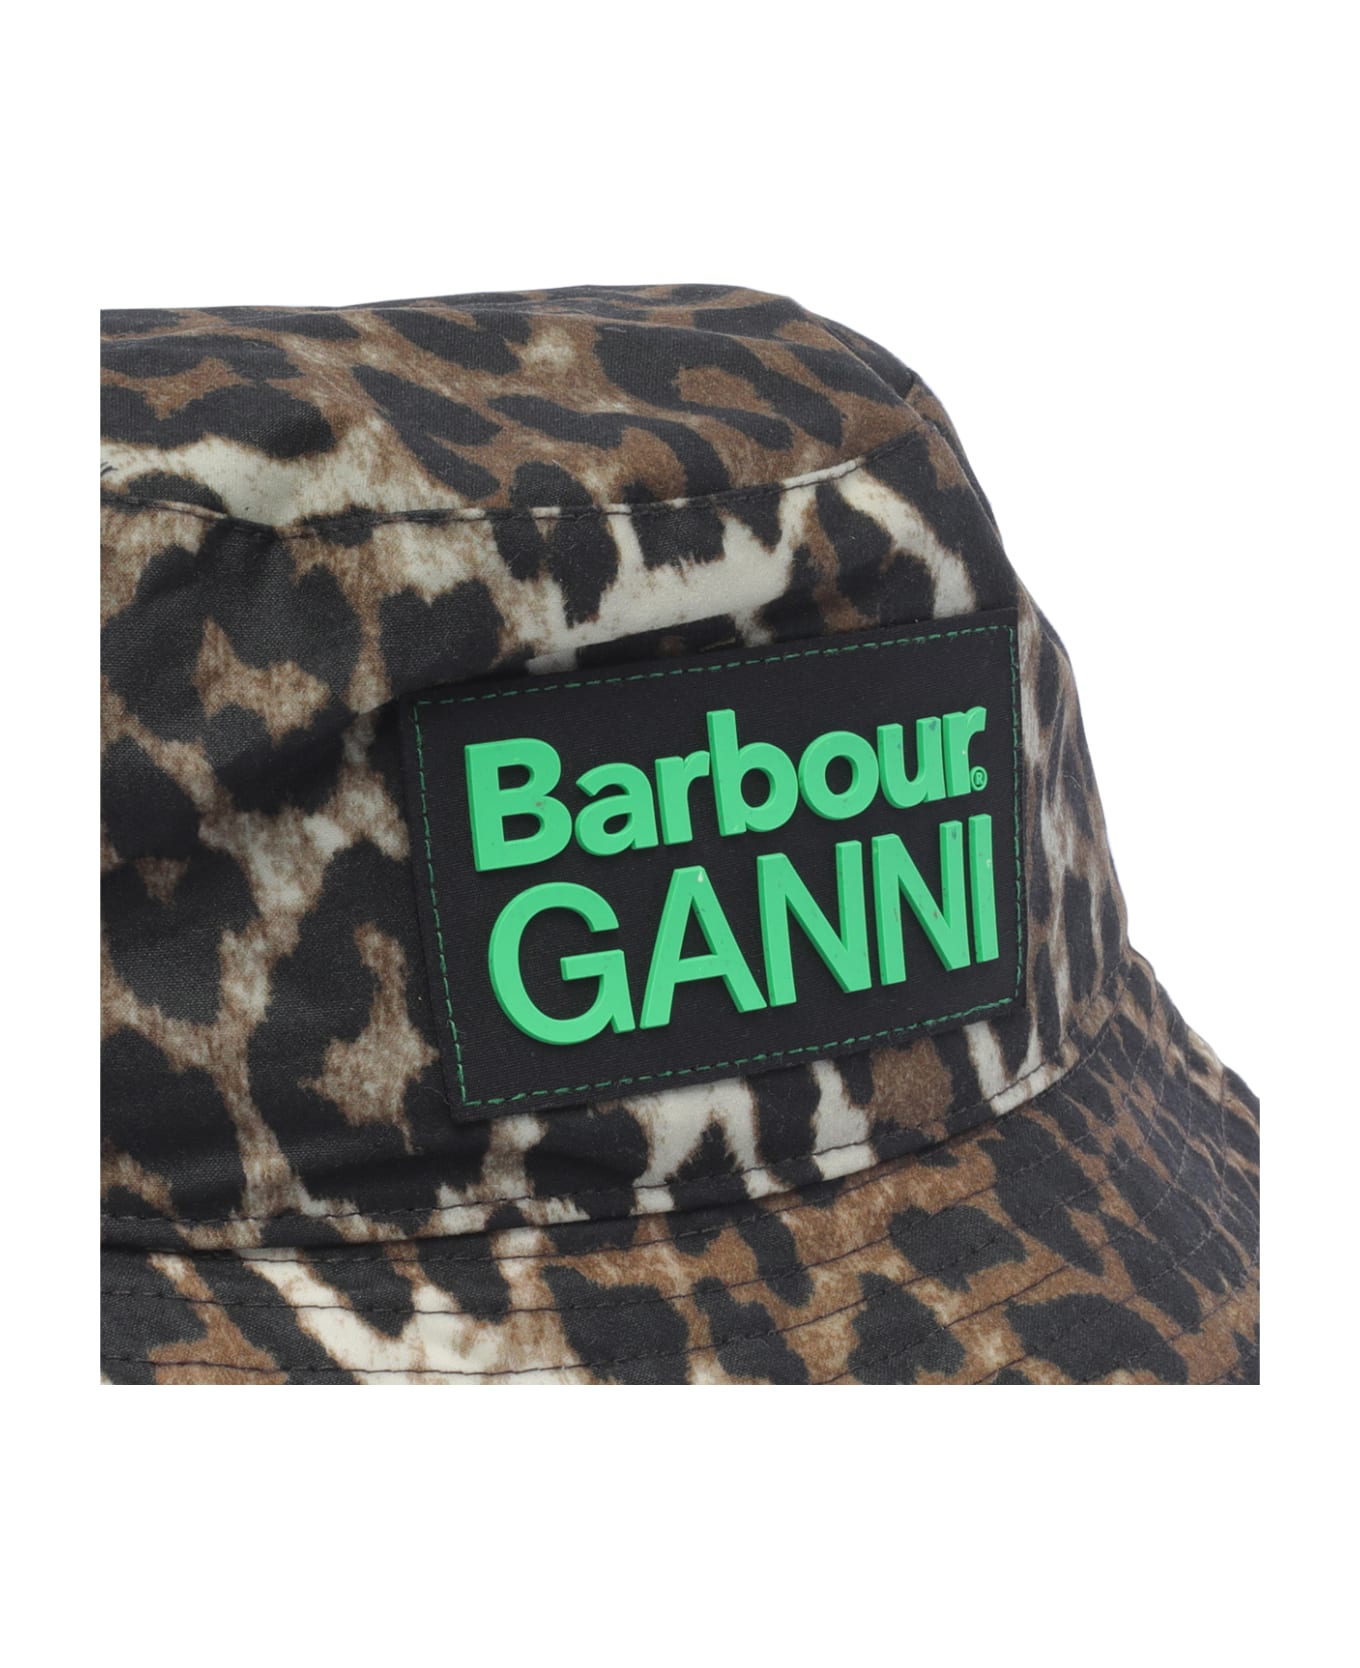 Barbour Waxed Leopard Bucket Hat - MultiColour